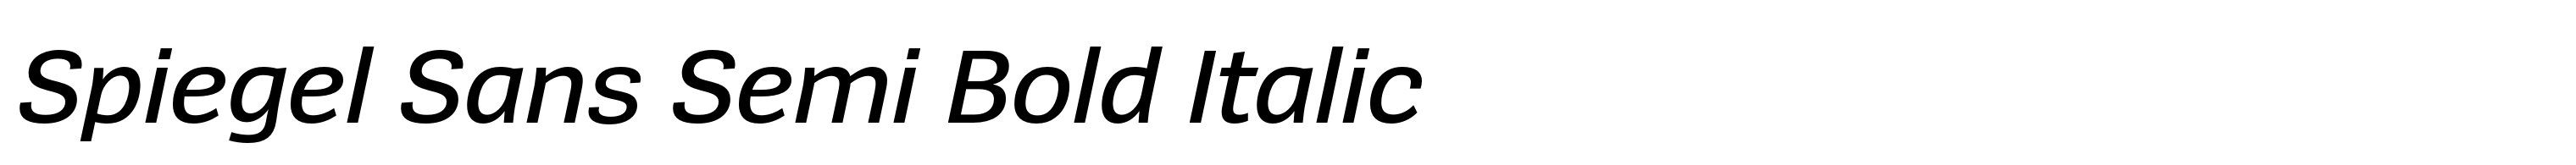 Spiegel Sans Semi Bold Italic